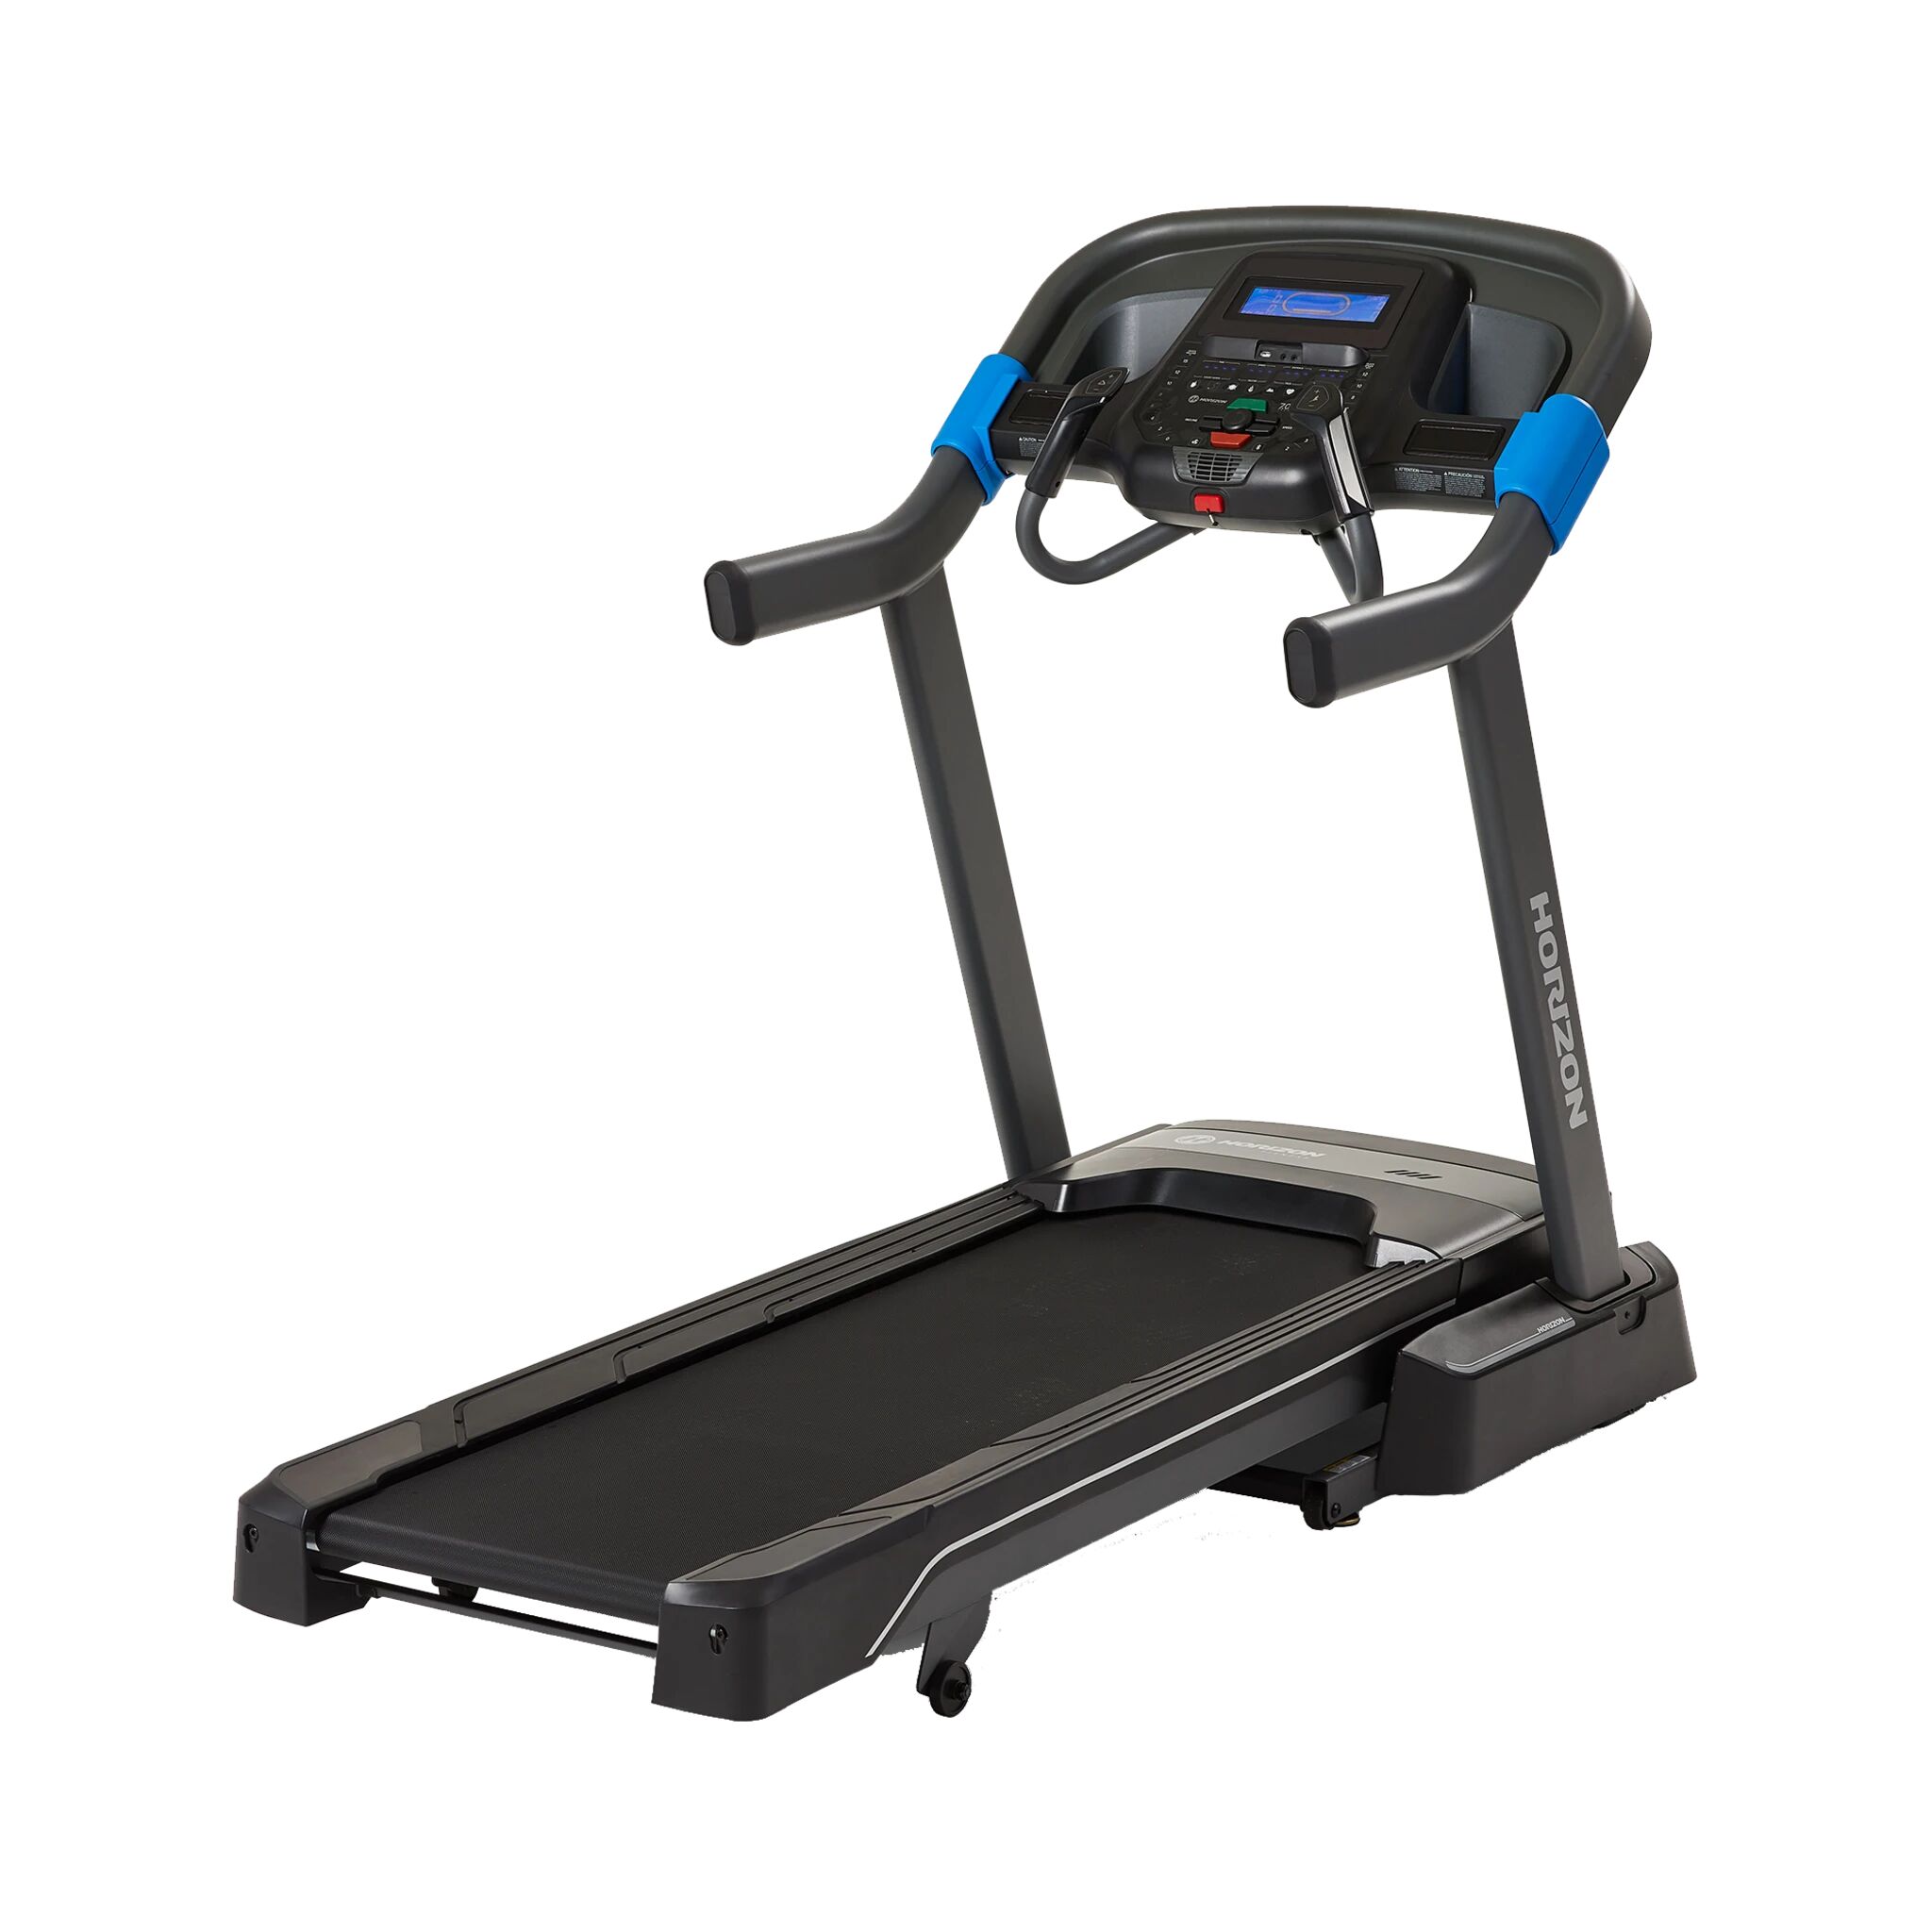 Horizon Treadmill 7.0a, tredemølle STD Black/Blue